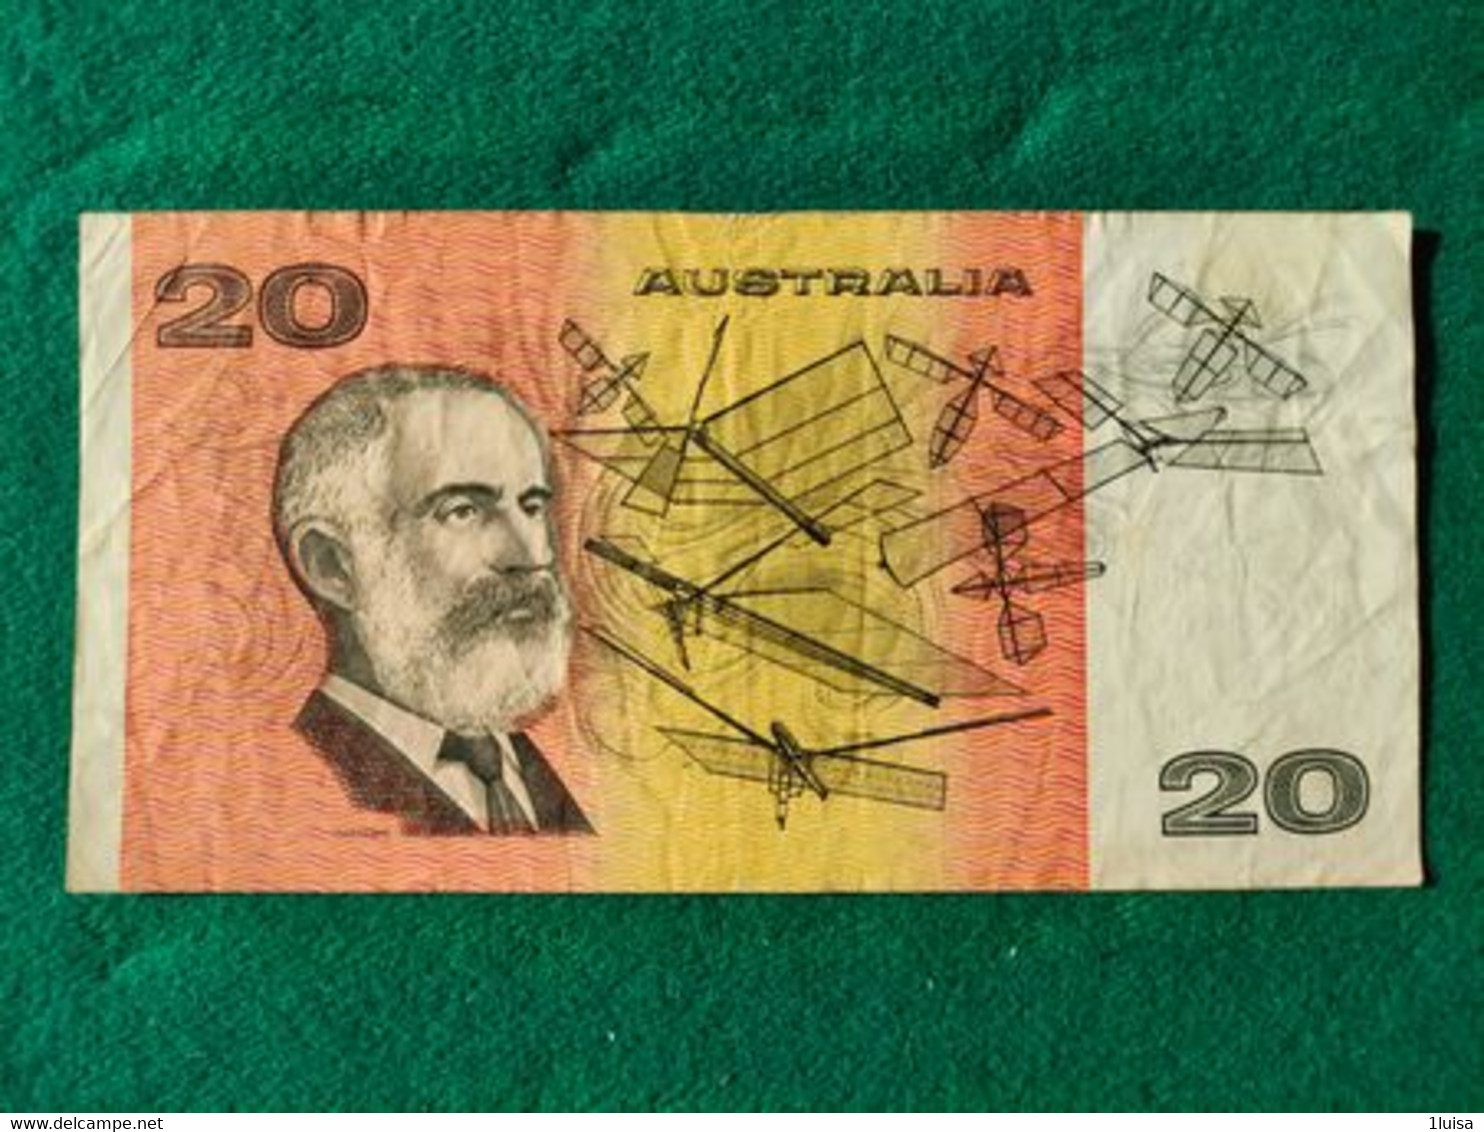 Australia 20 Dollari 1985 - 1988 (10$ Polymer Notes)